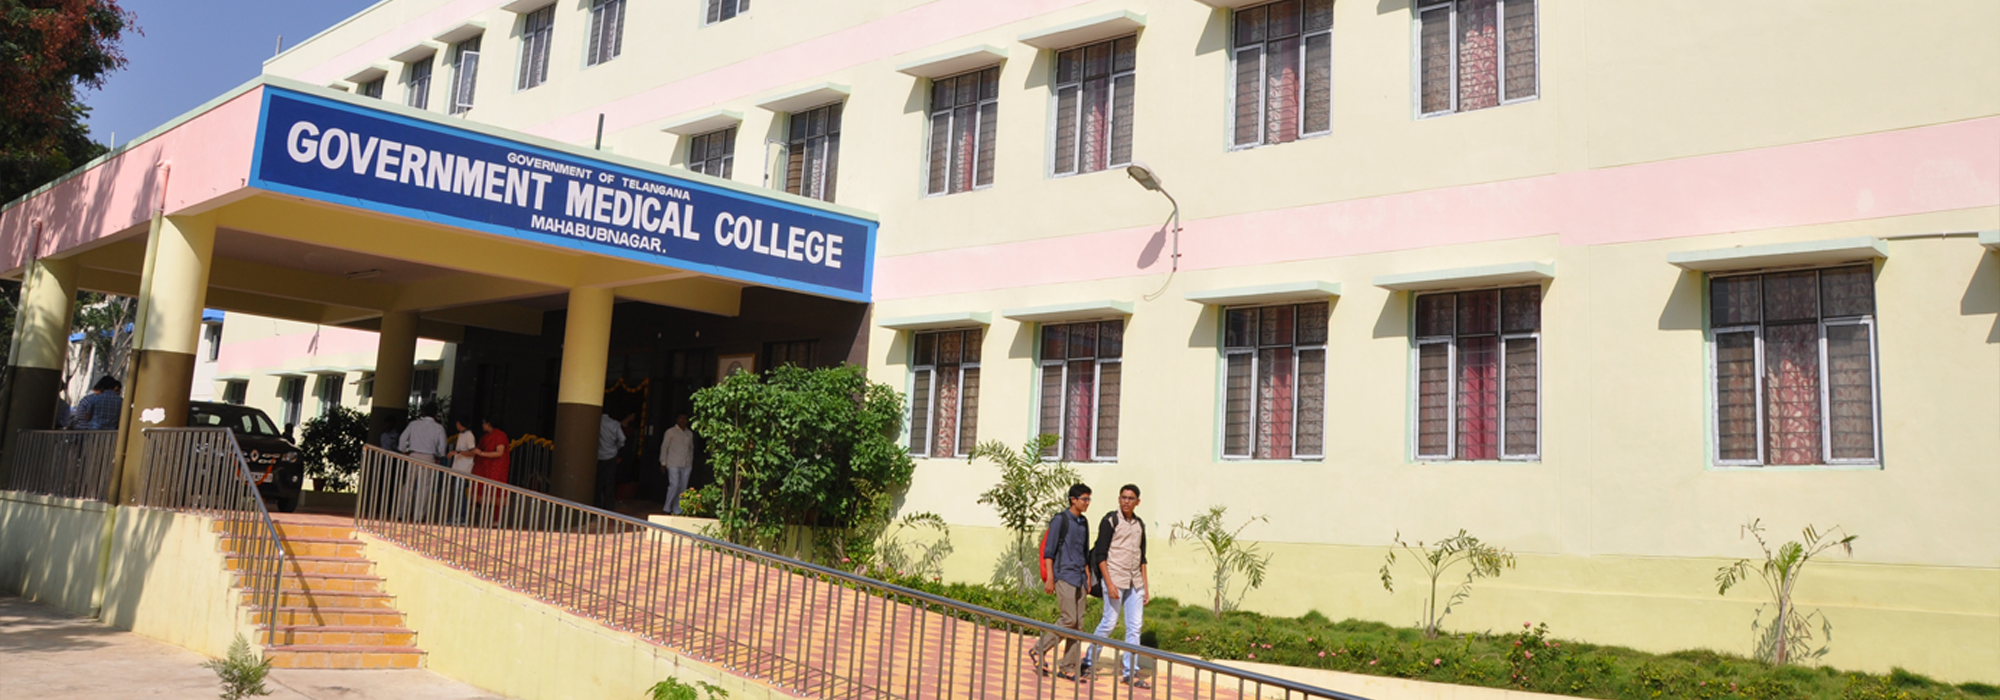 Government Medical College, Mahabubnagar, Mahbubnagar